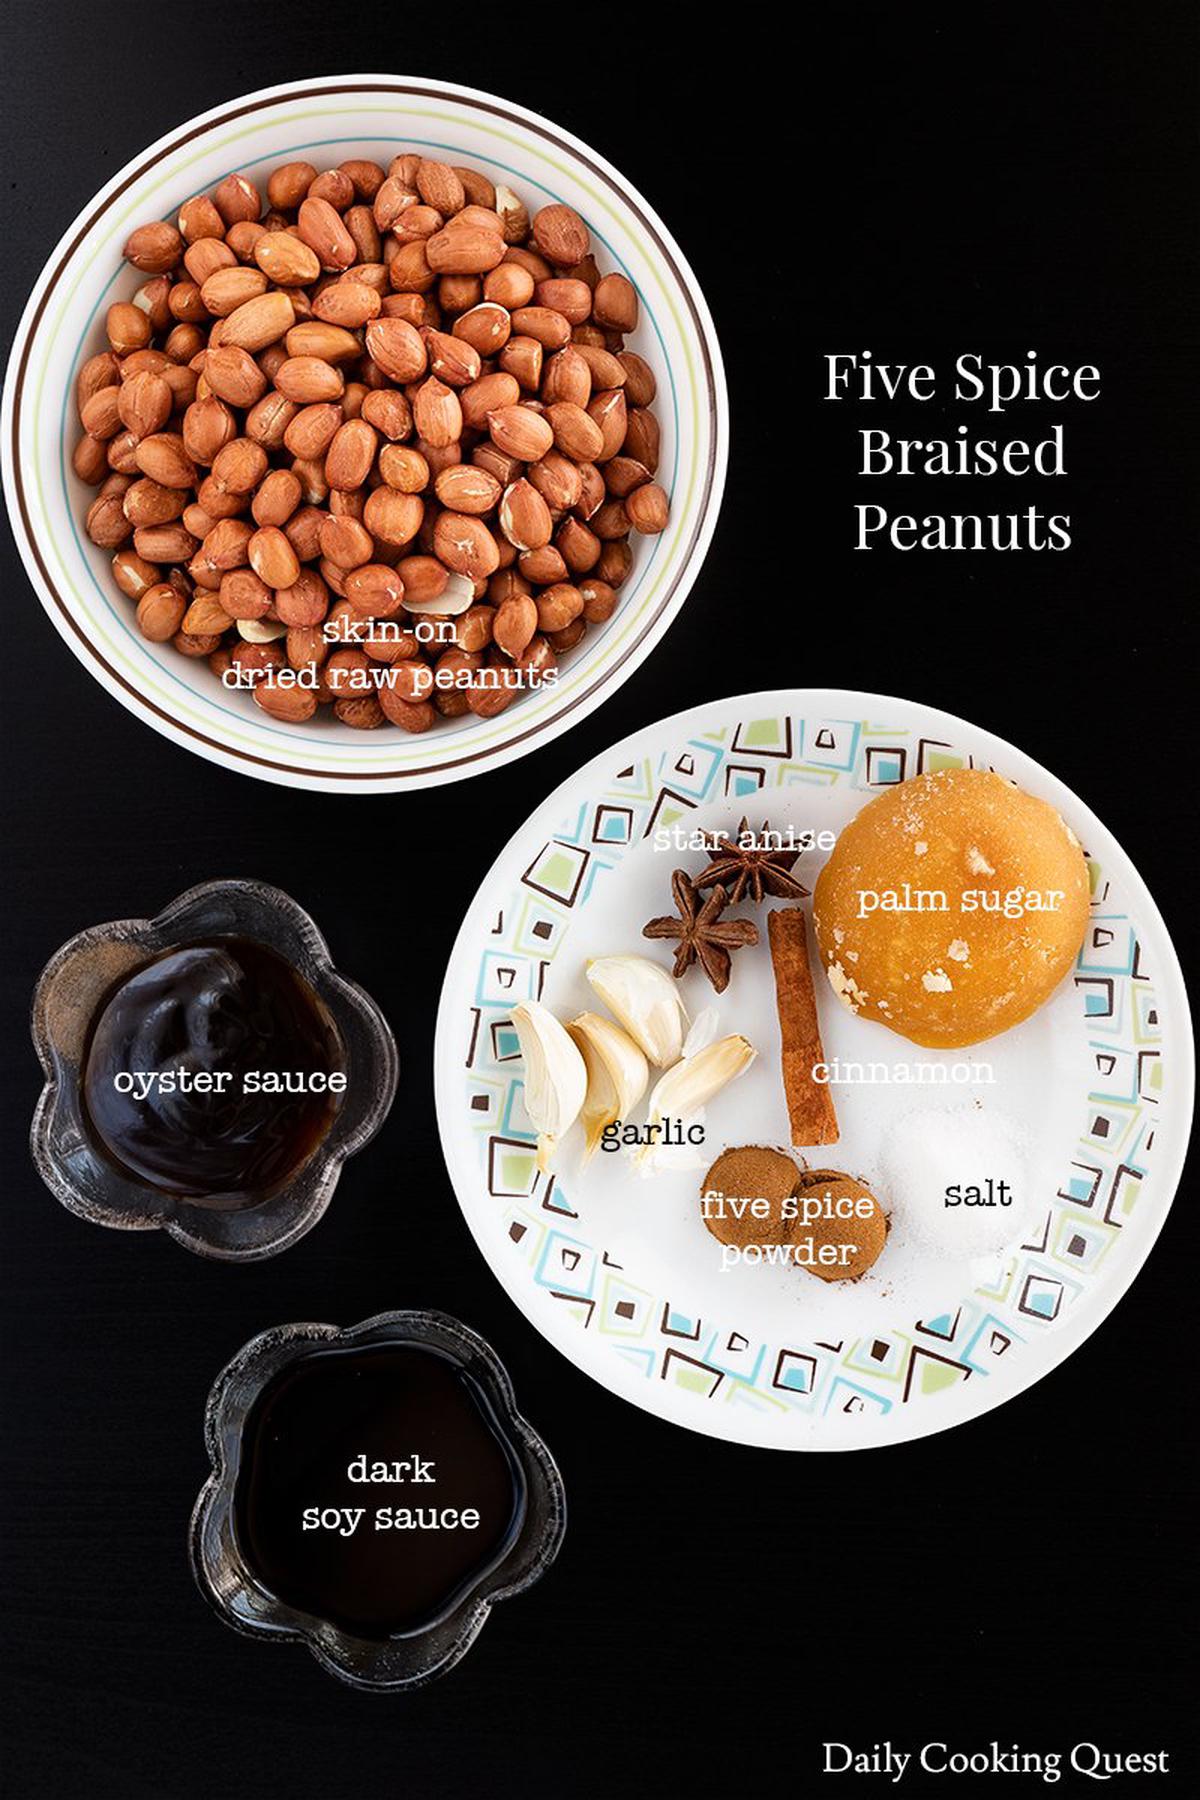 Five Spice Braised Peanuts